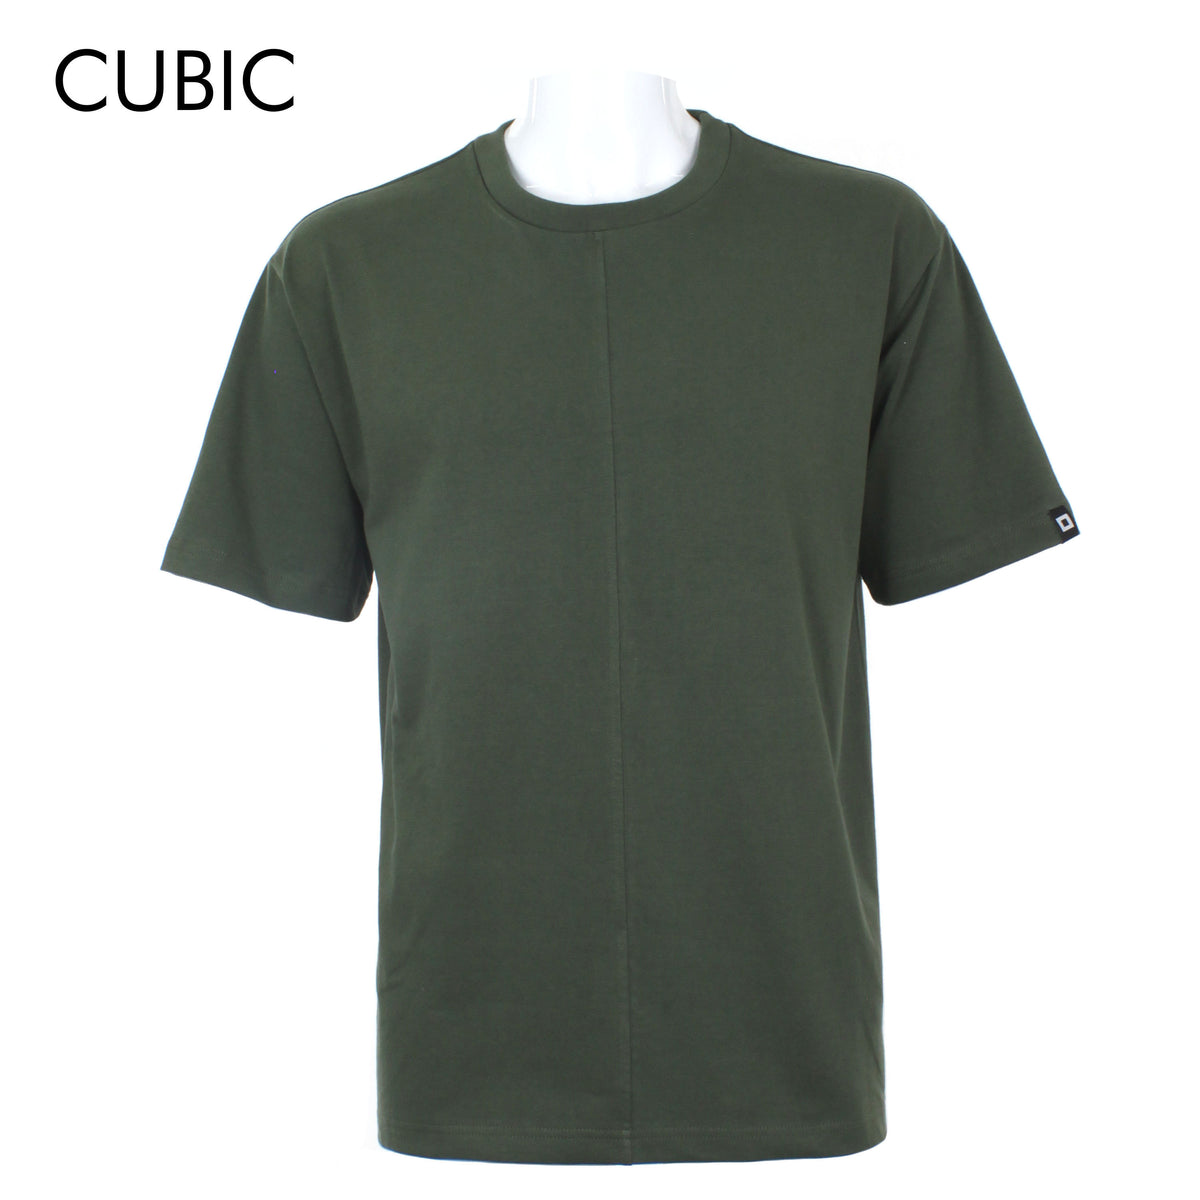 Cubic Men Plain Oversized Boxy Tee / Box Fit T shirt Top Top for Men - CMH2320R